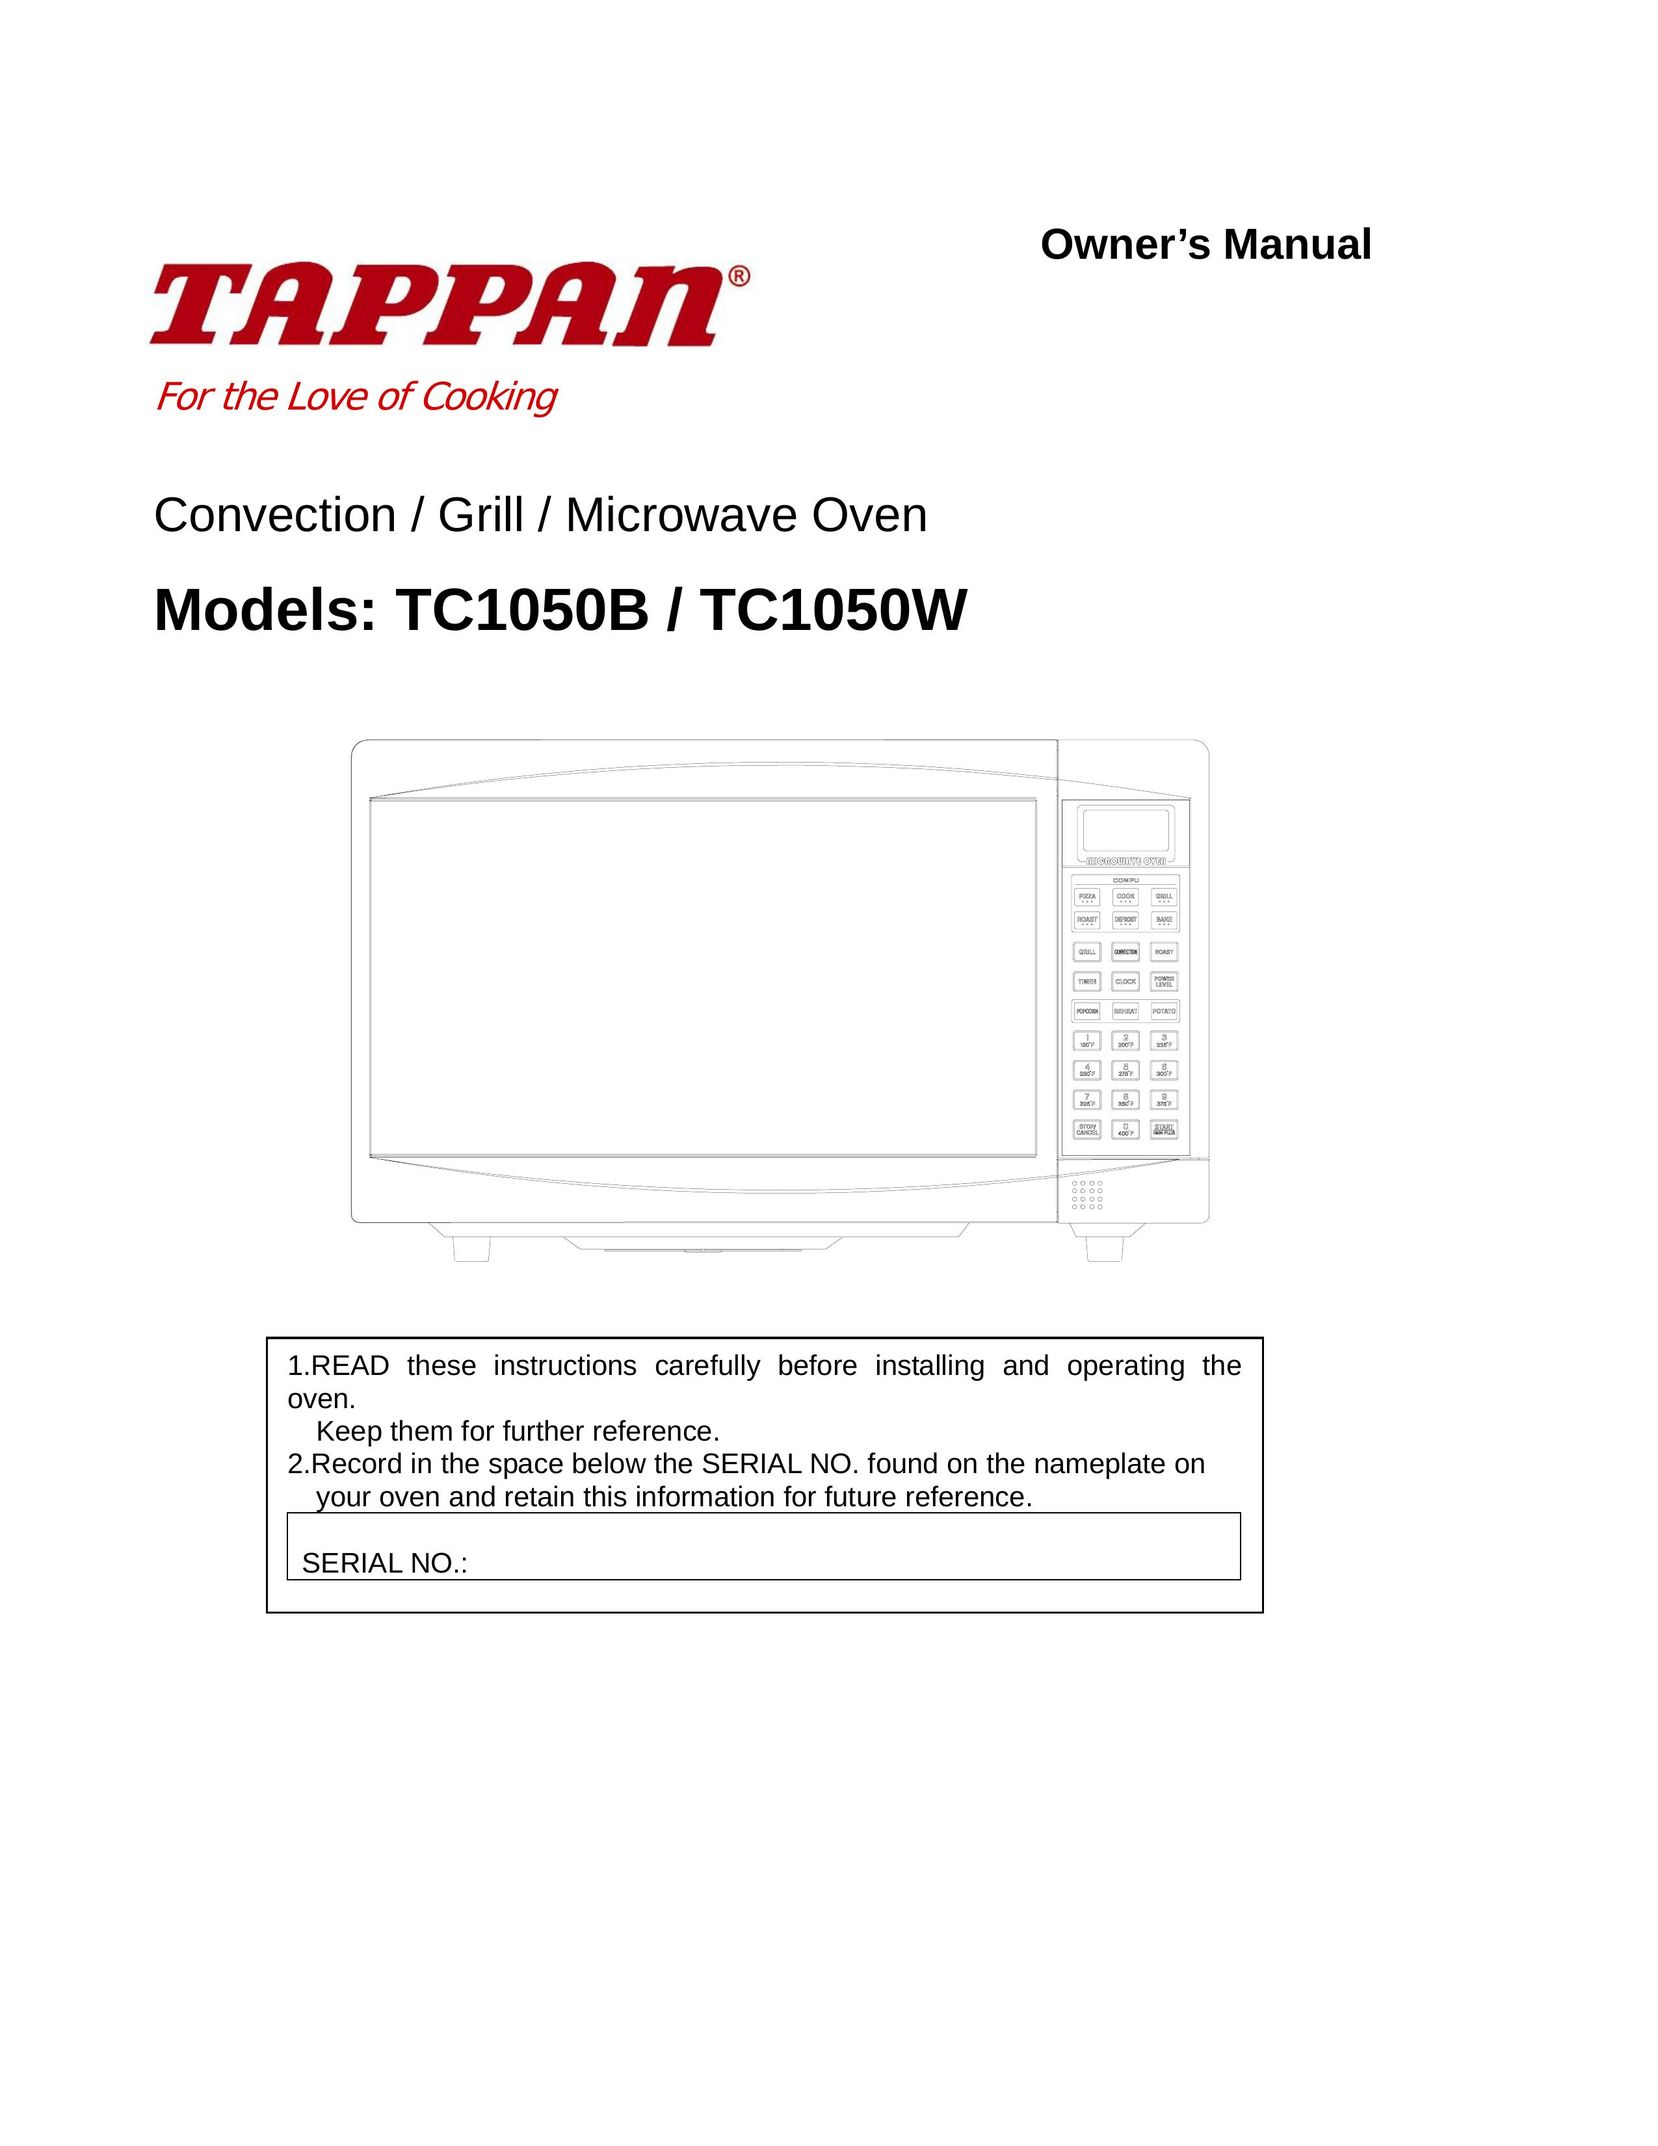 Tappan TC1050W Microwave Oven User Manual